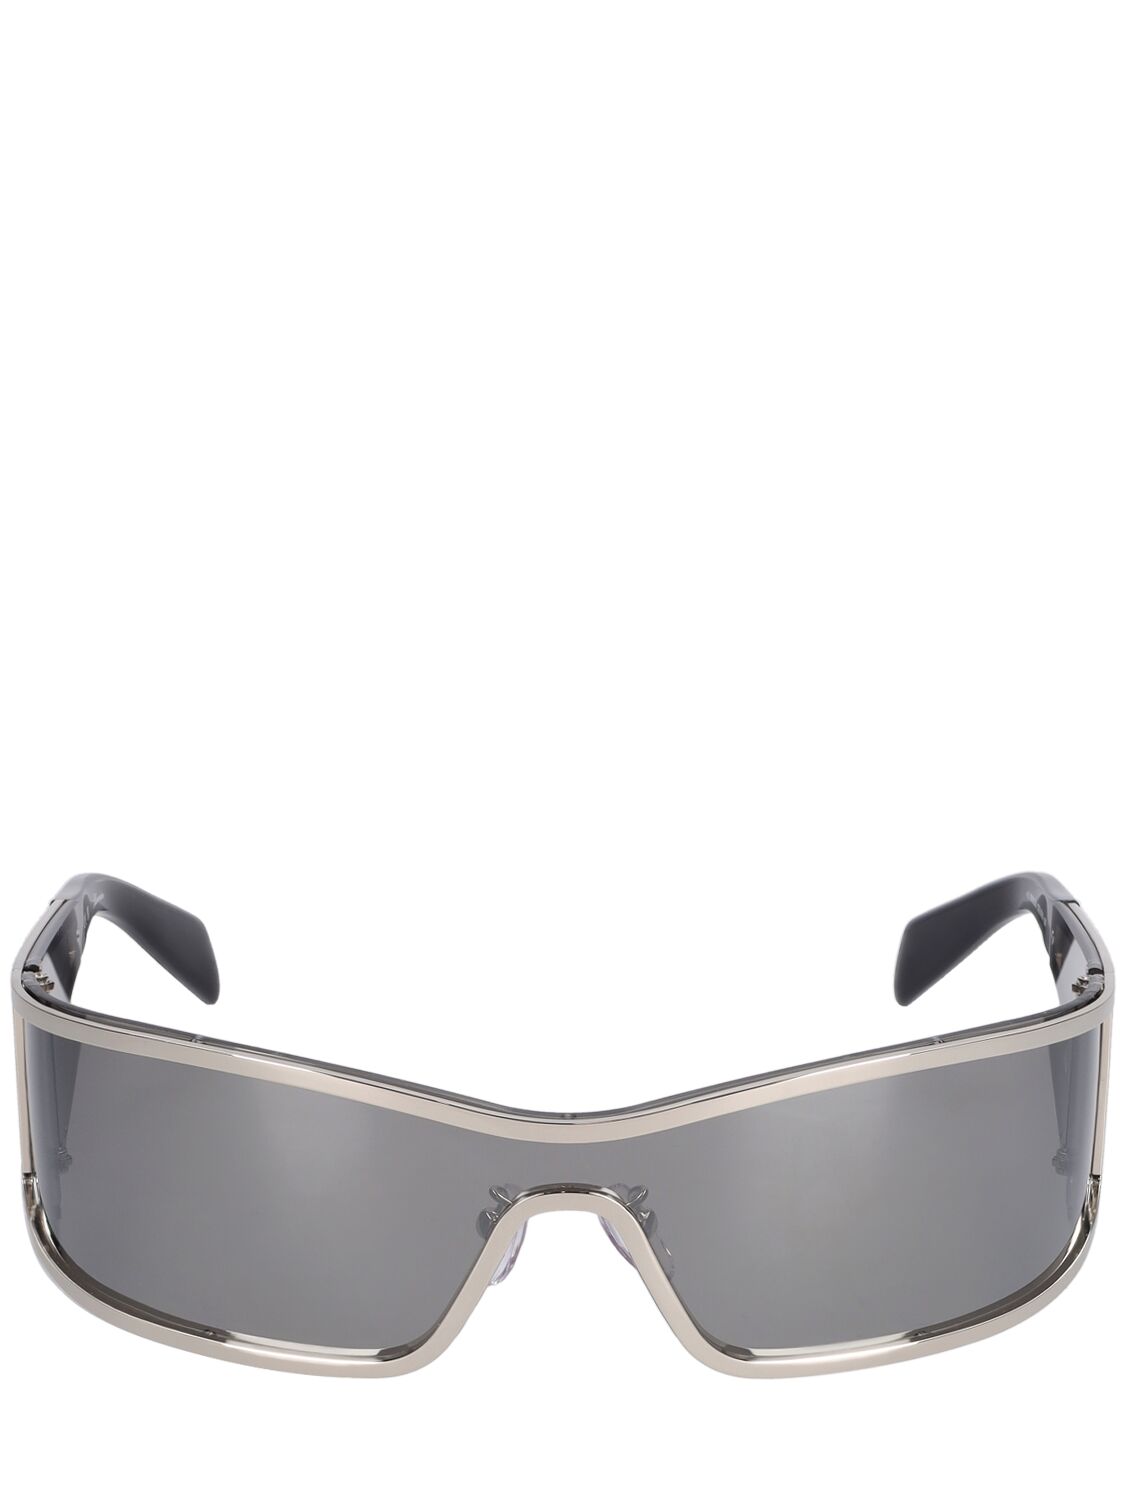 Image of Slim Mask Acetate Sunglasses